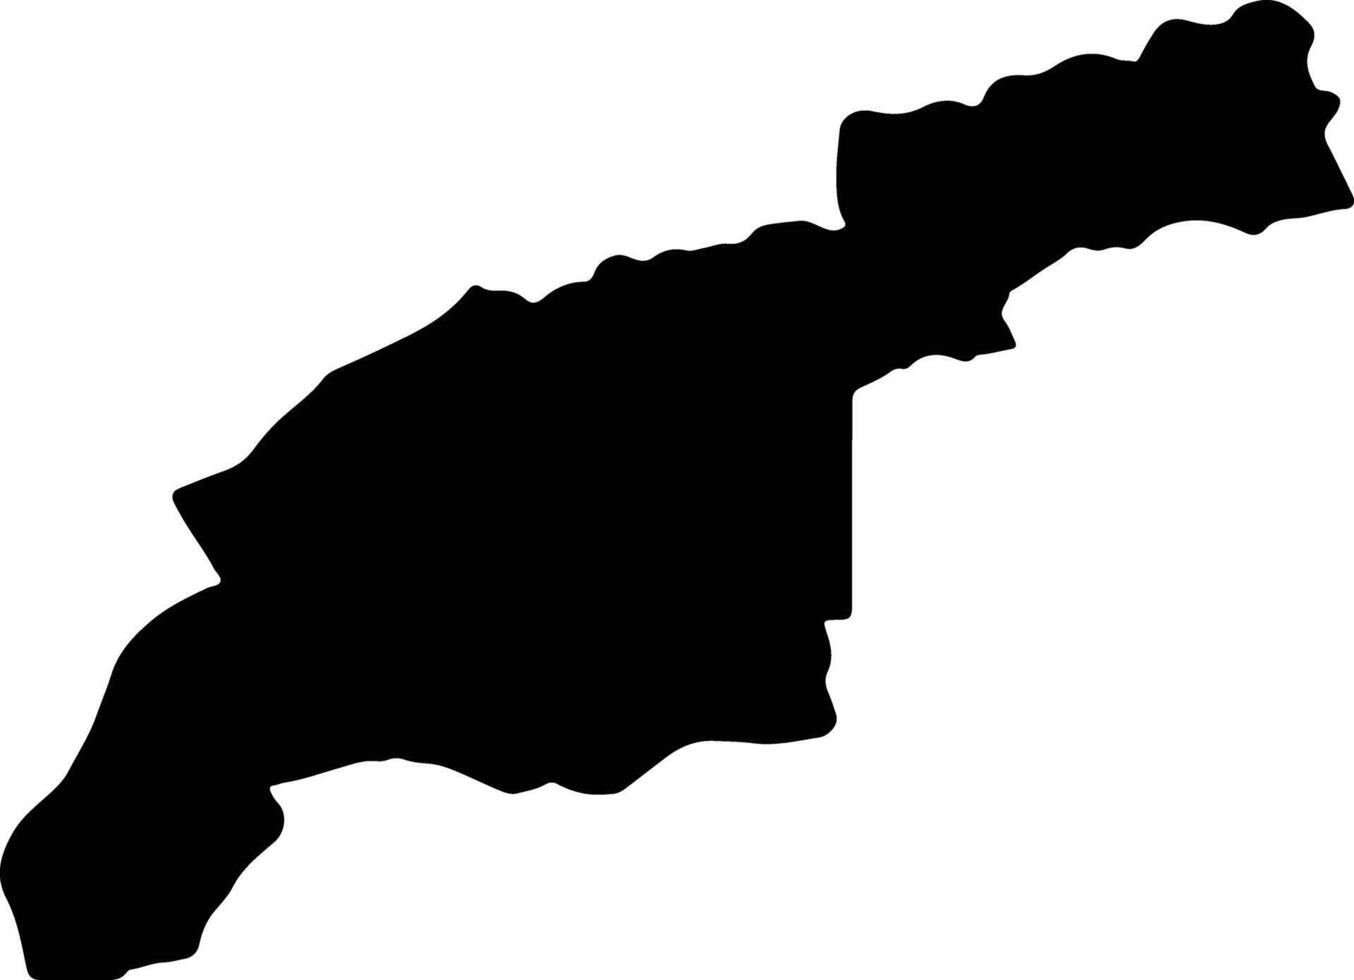 guelmim - es-semara Marocco silhouette carta geografica vettore